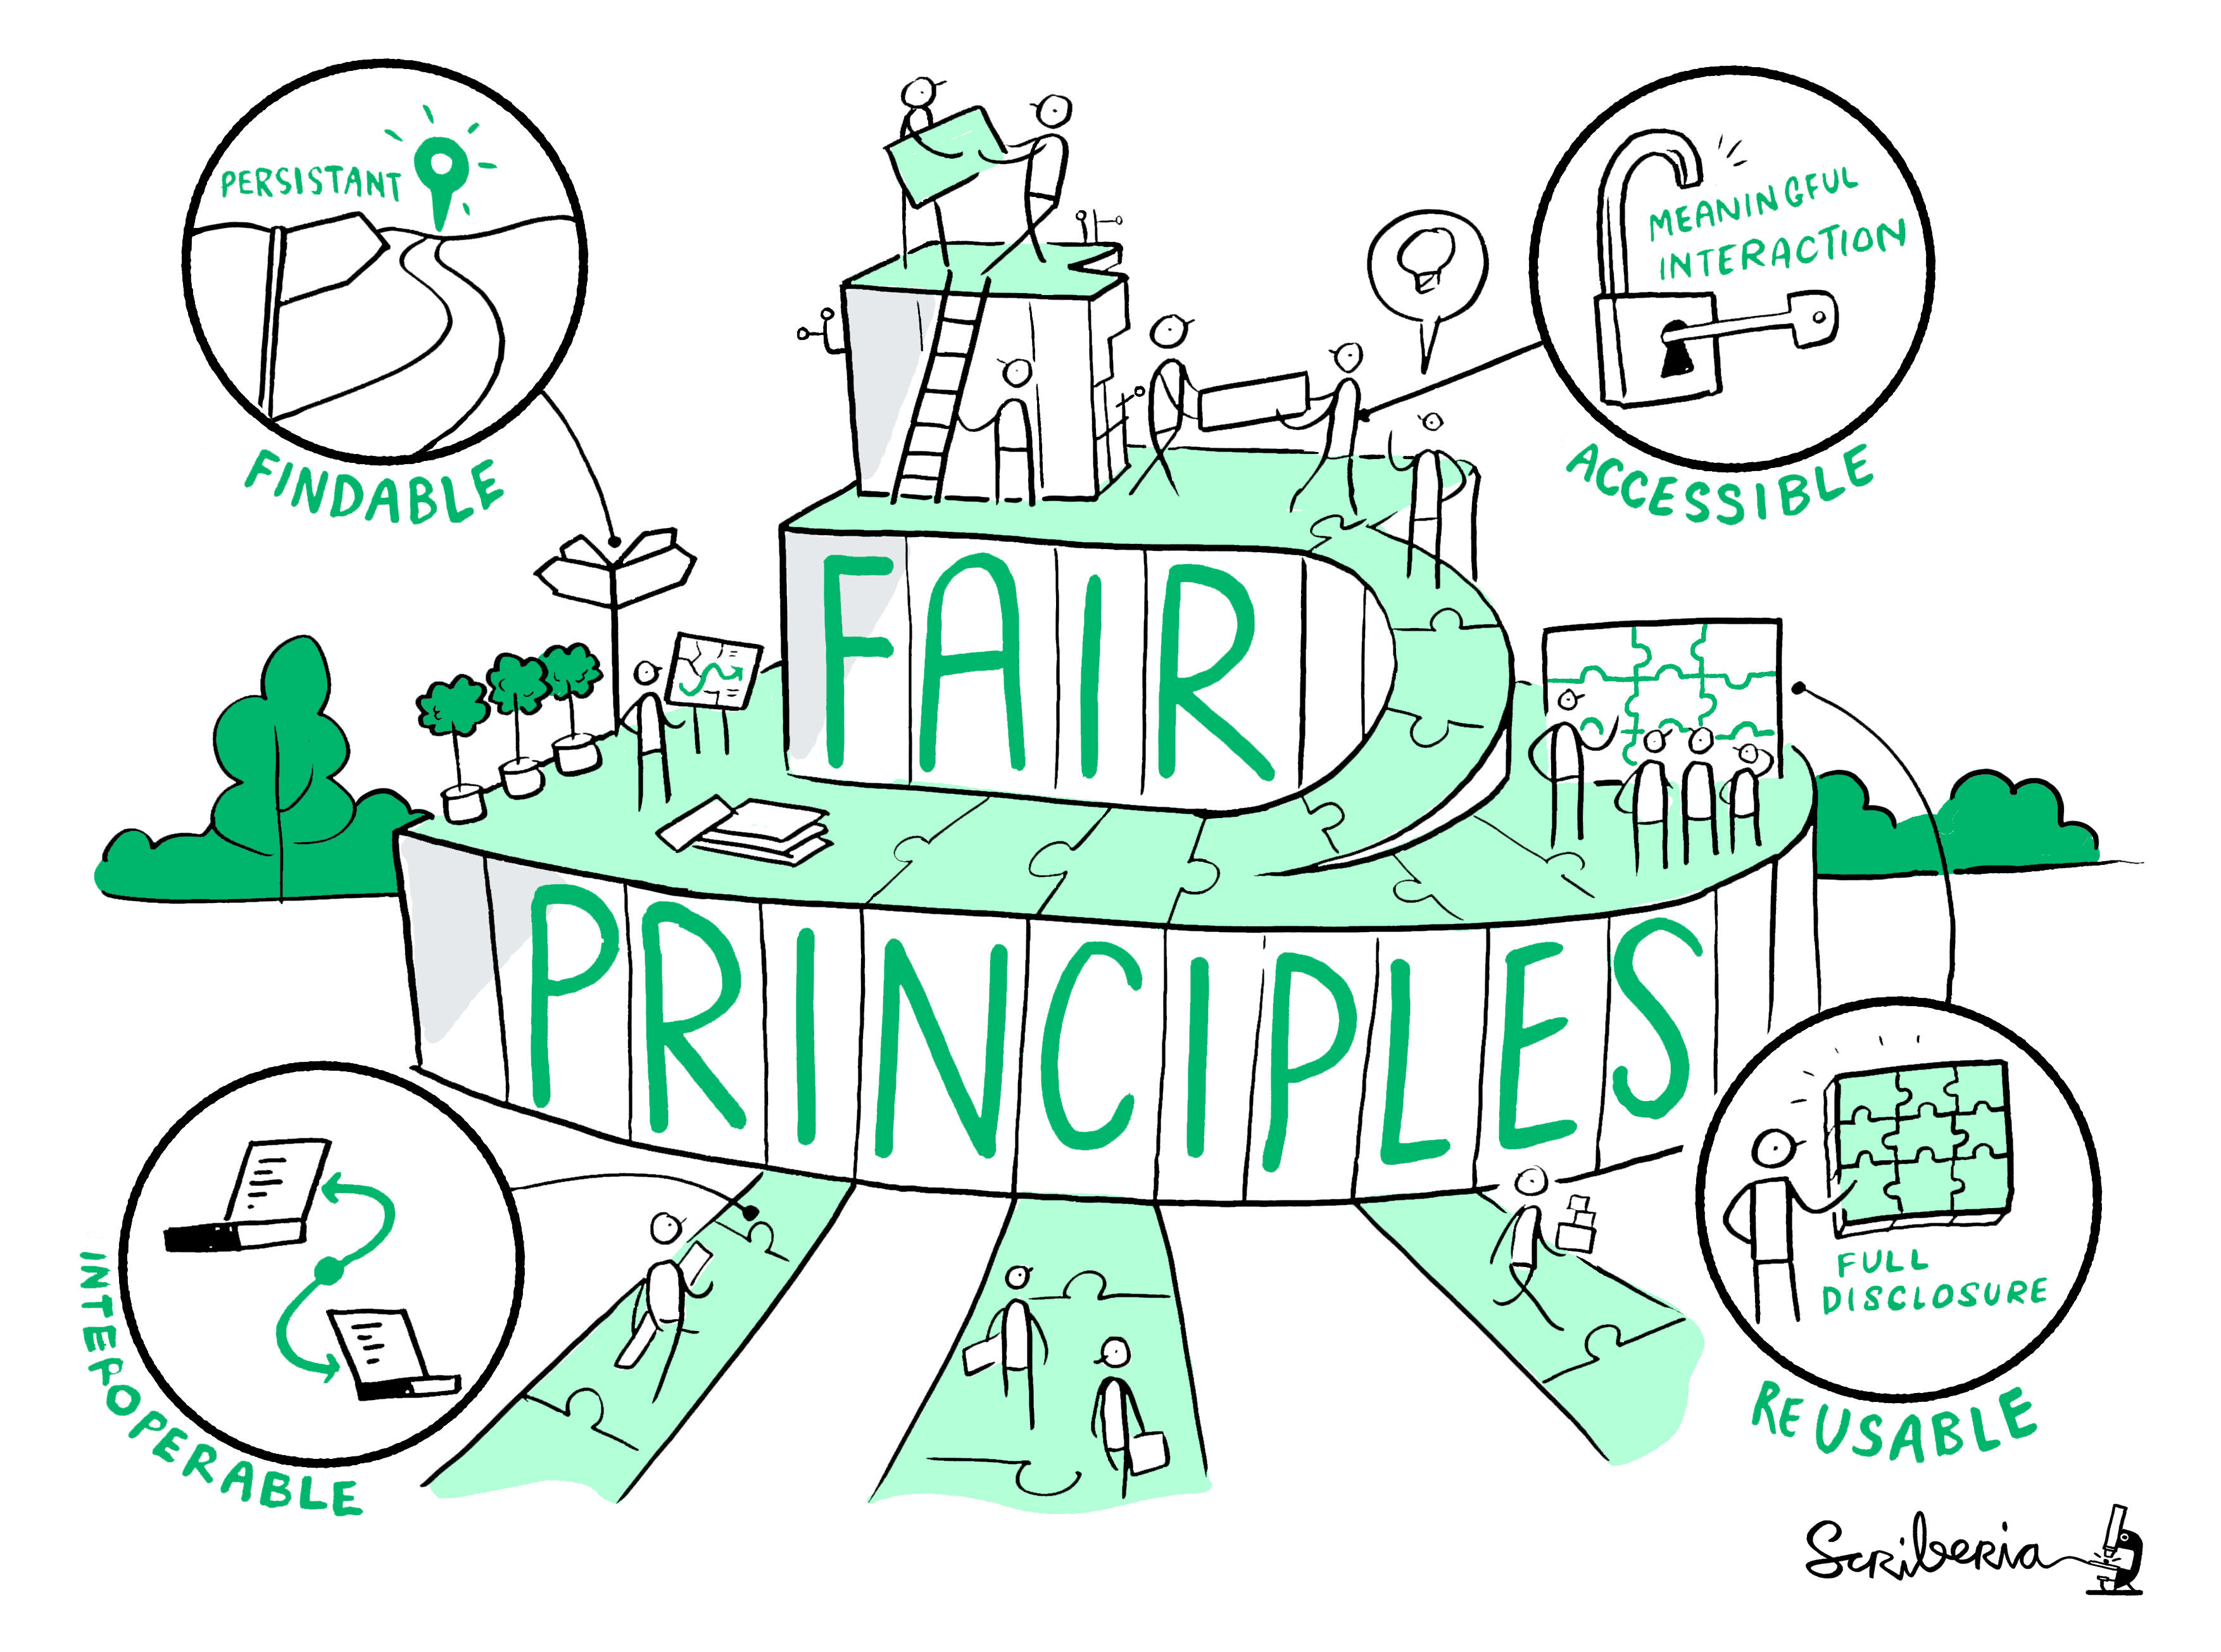 FAIR principles illustration by Scriberia